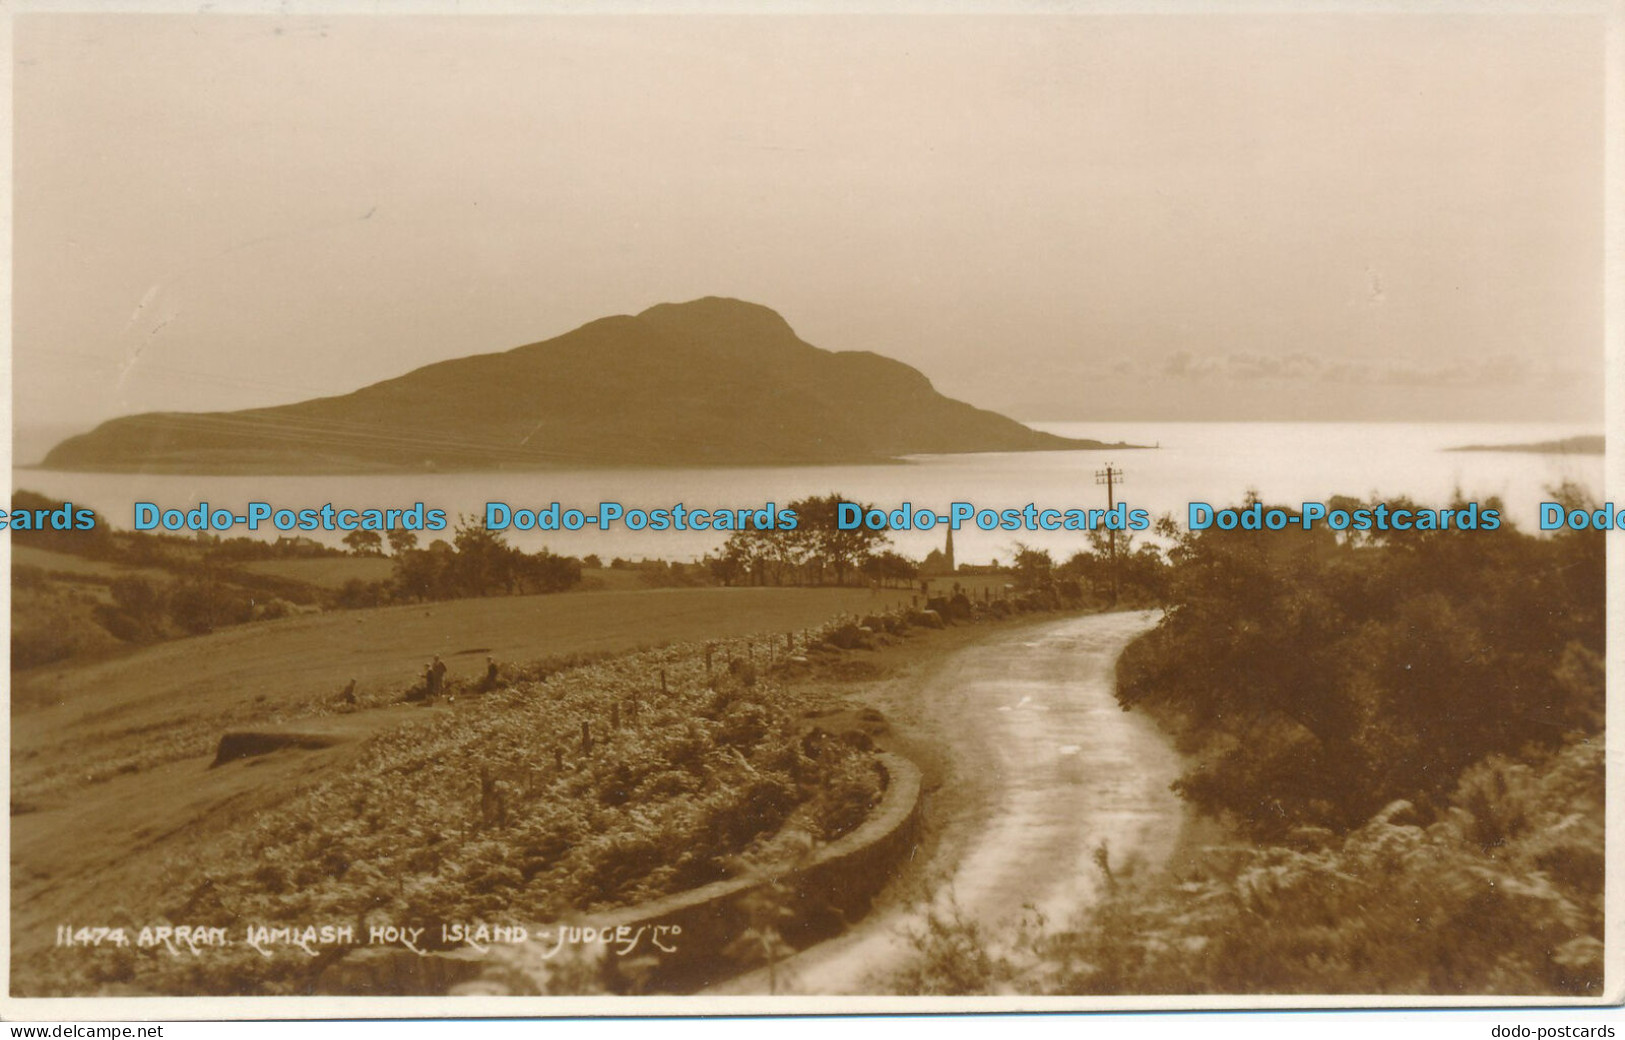 R000349 Arran. Lamlash Holy Island. Judges Ltd. No 11474 - Monde